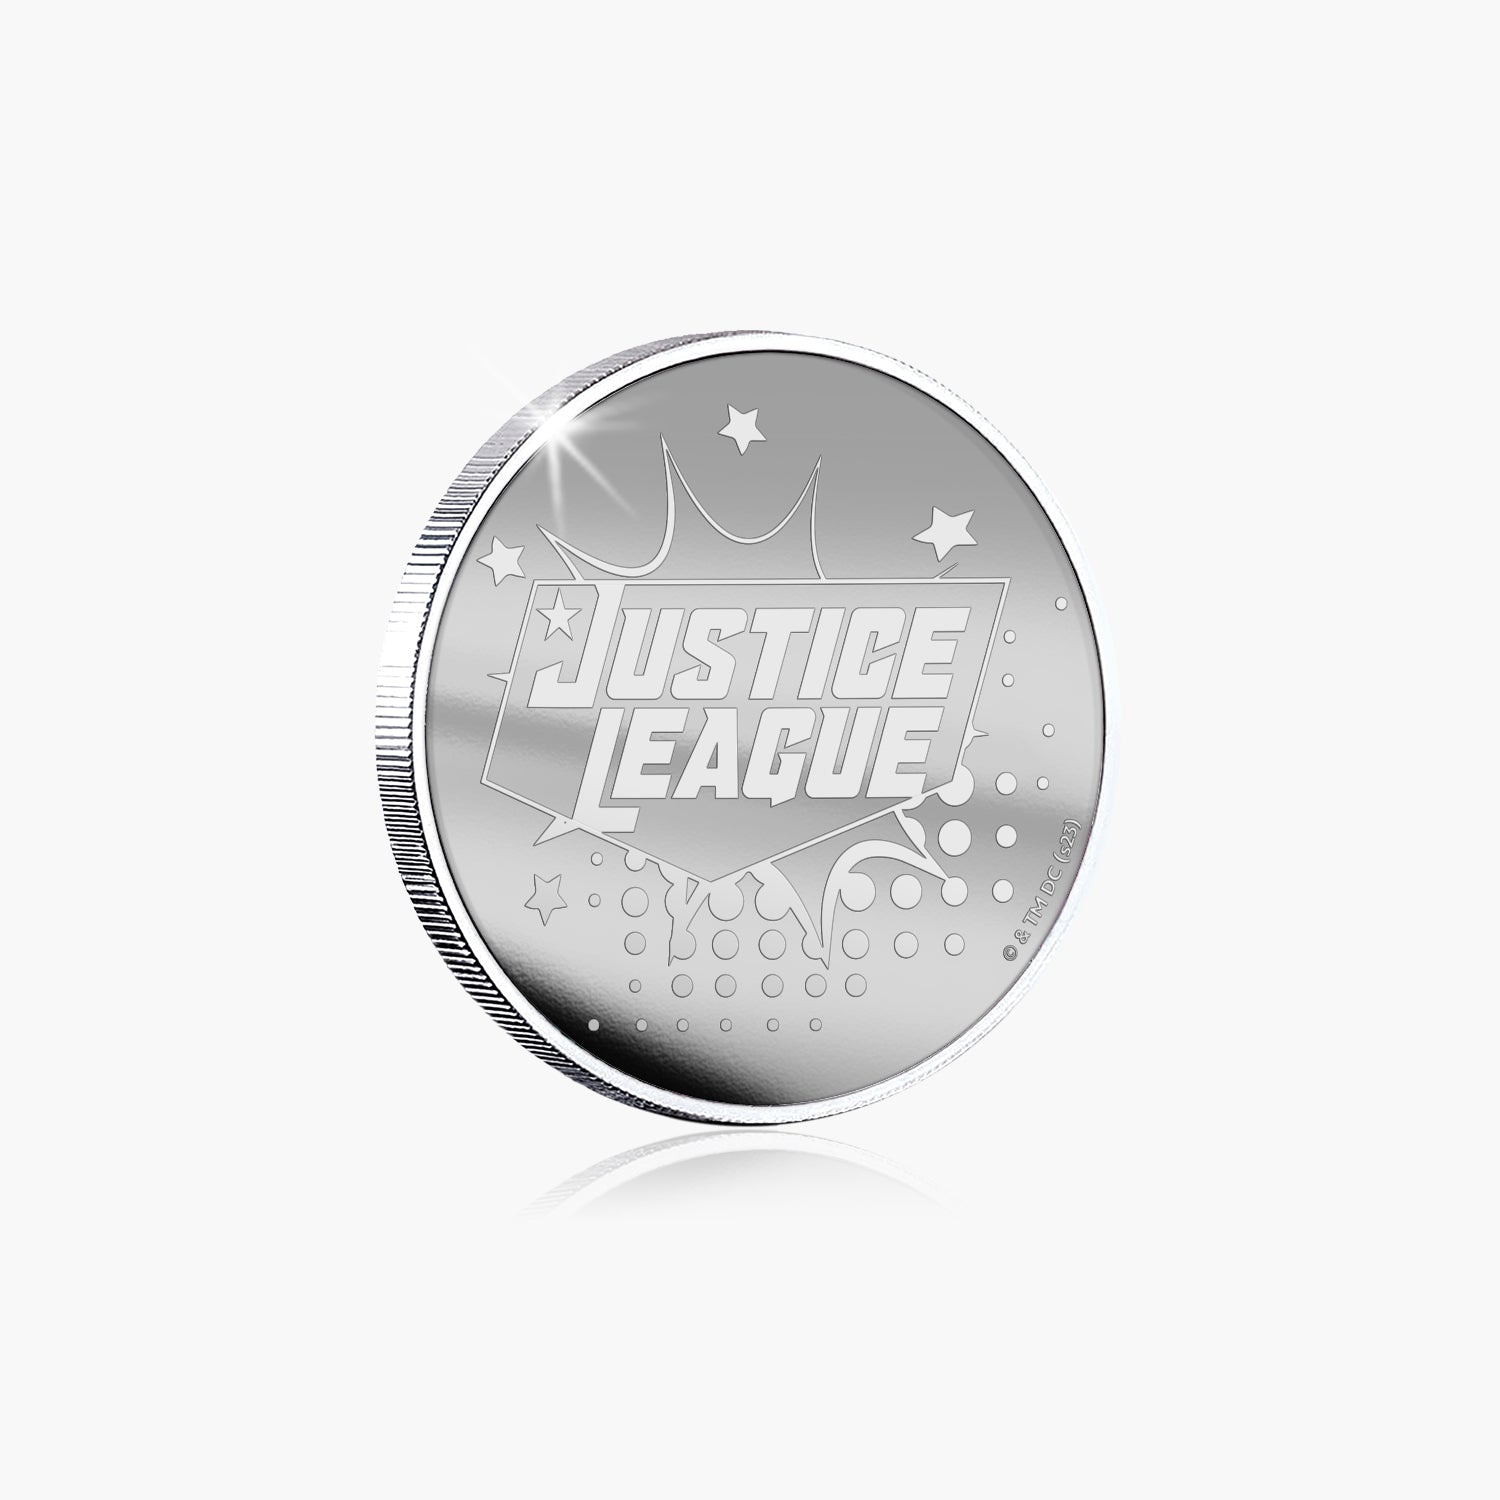 Justice League - Shazam - Wonder Woman - Aquaman Silver Plated Commemorative